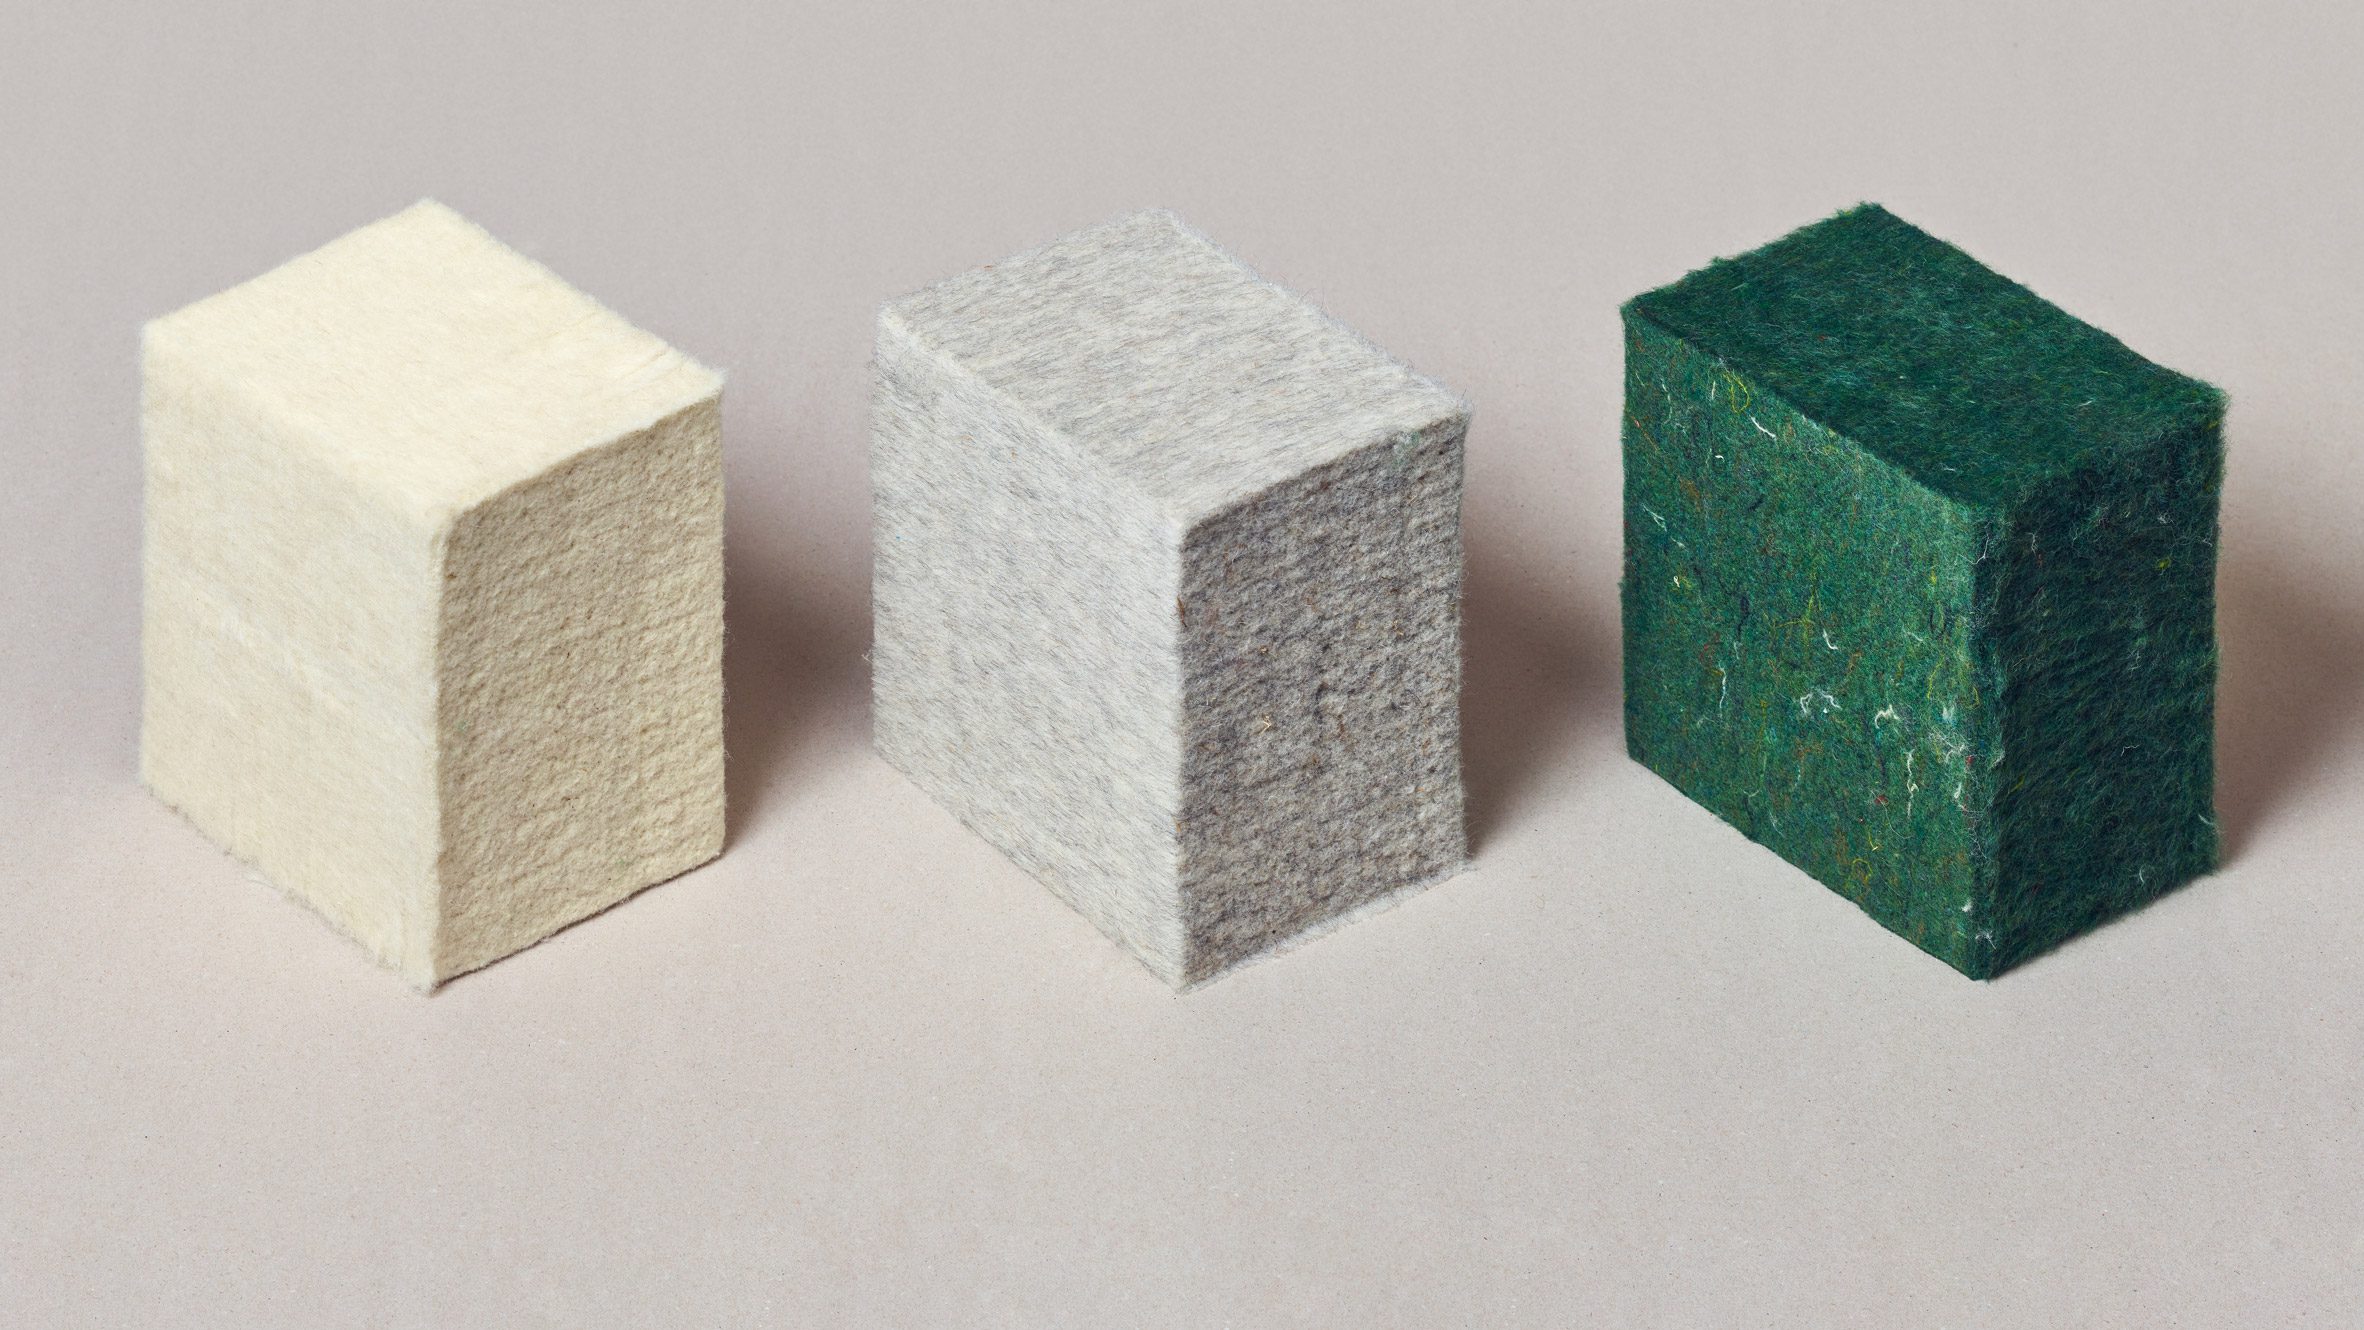 Robot-made wool blocks by Christien Meindertsma